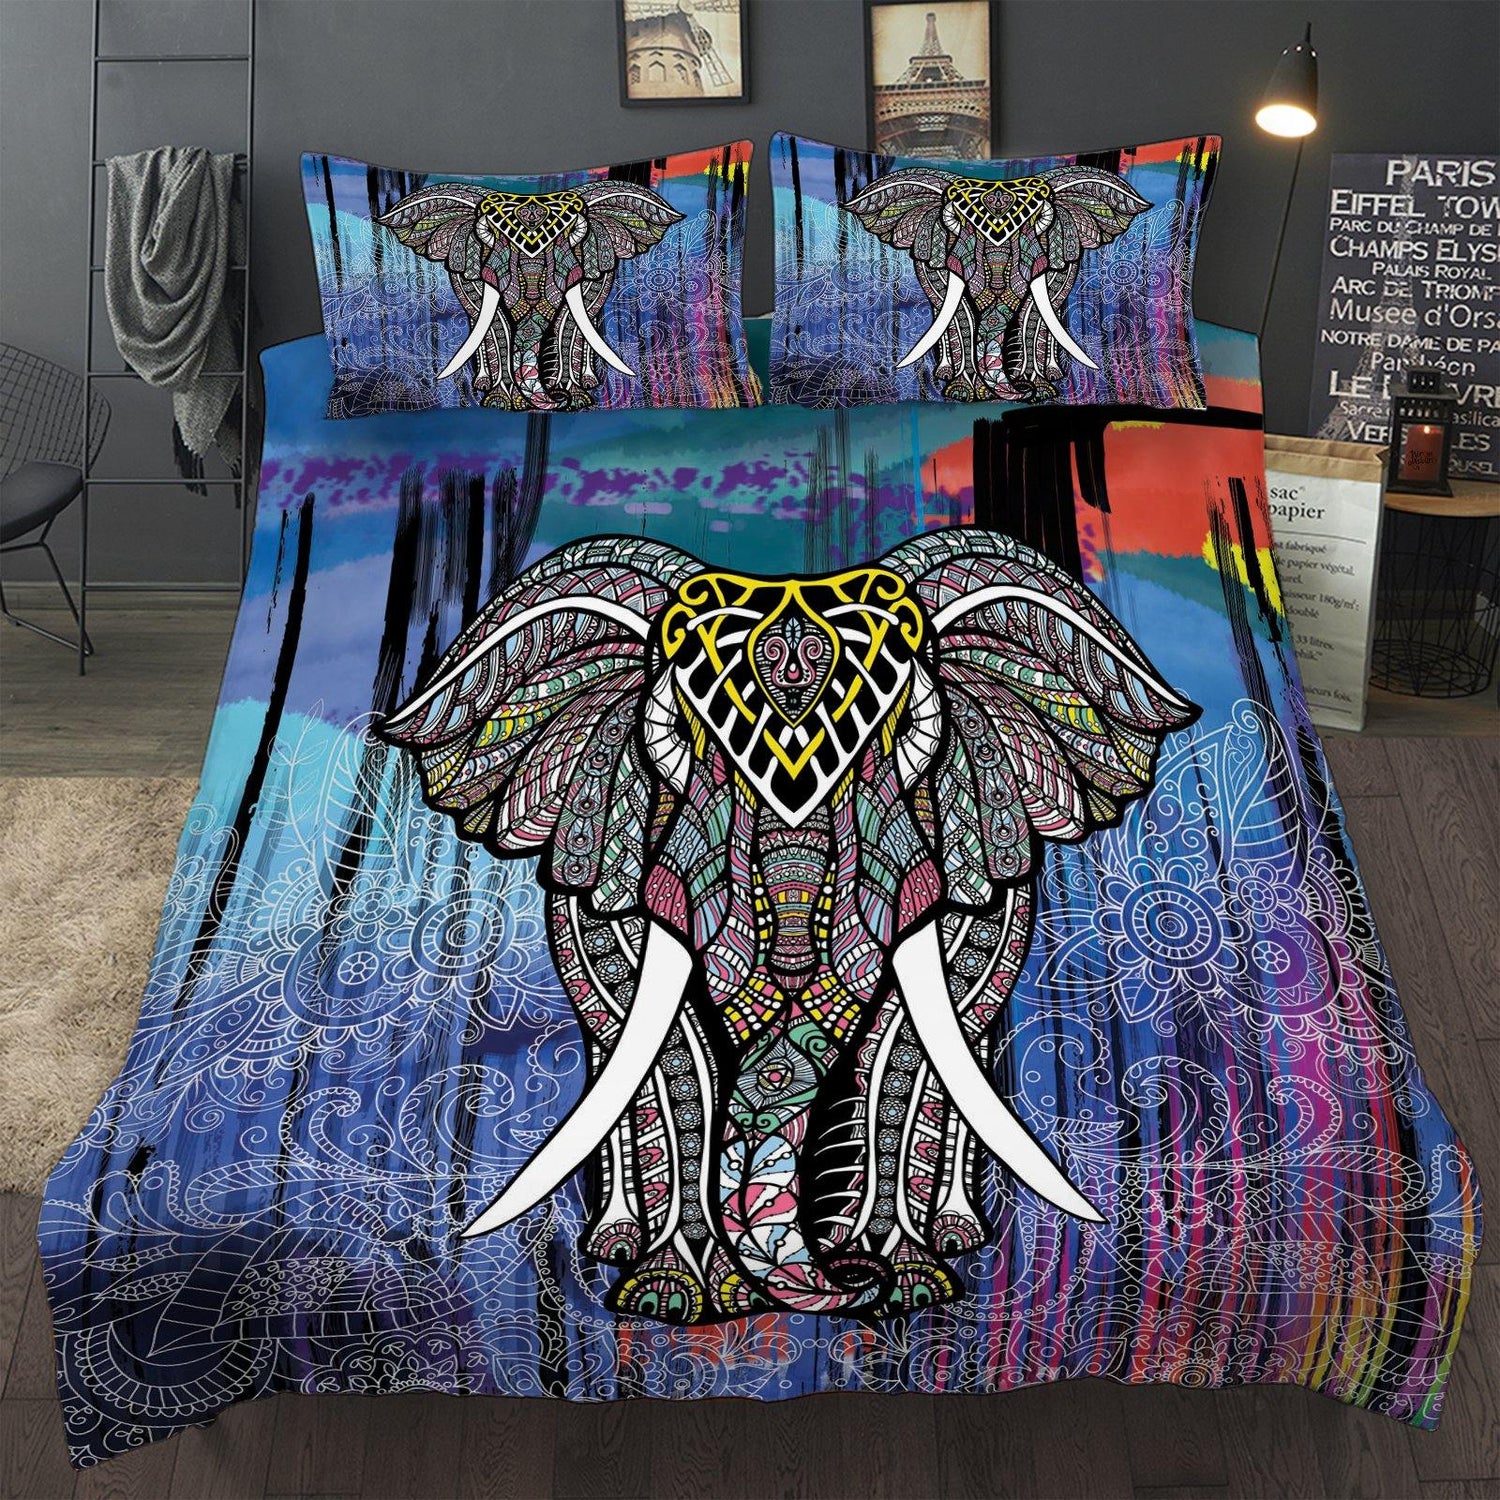 WONGS BEDDING Color elephant print duvet cover set bedding bedroom home kit - Wongs bedding